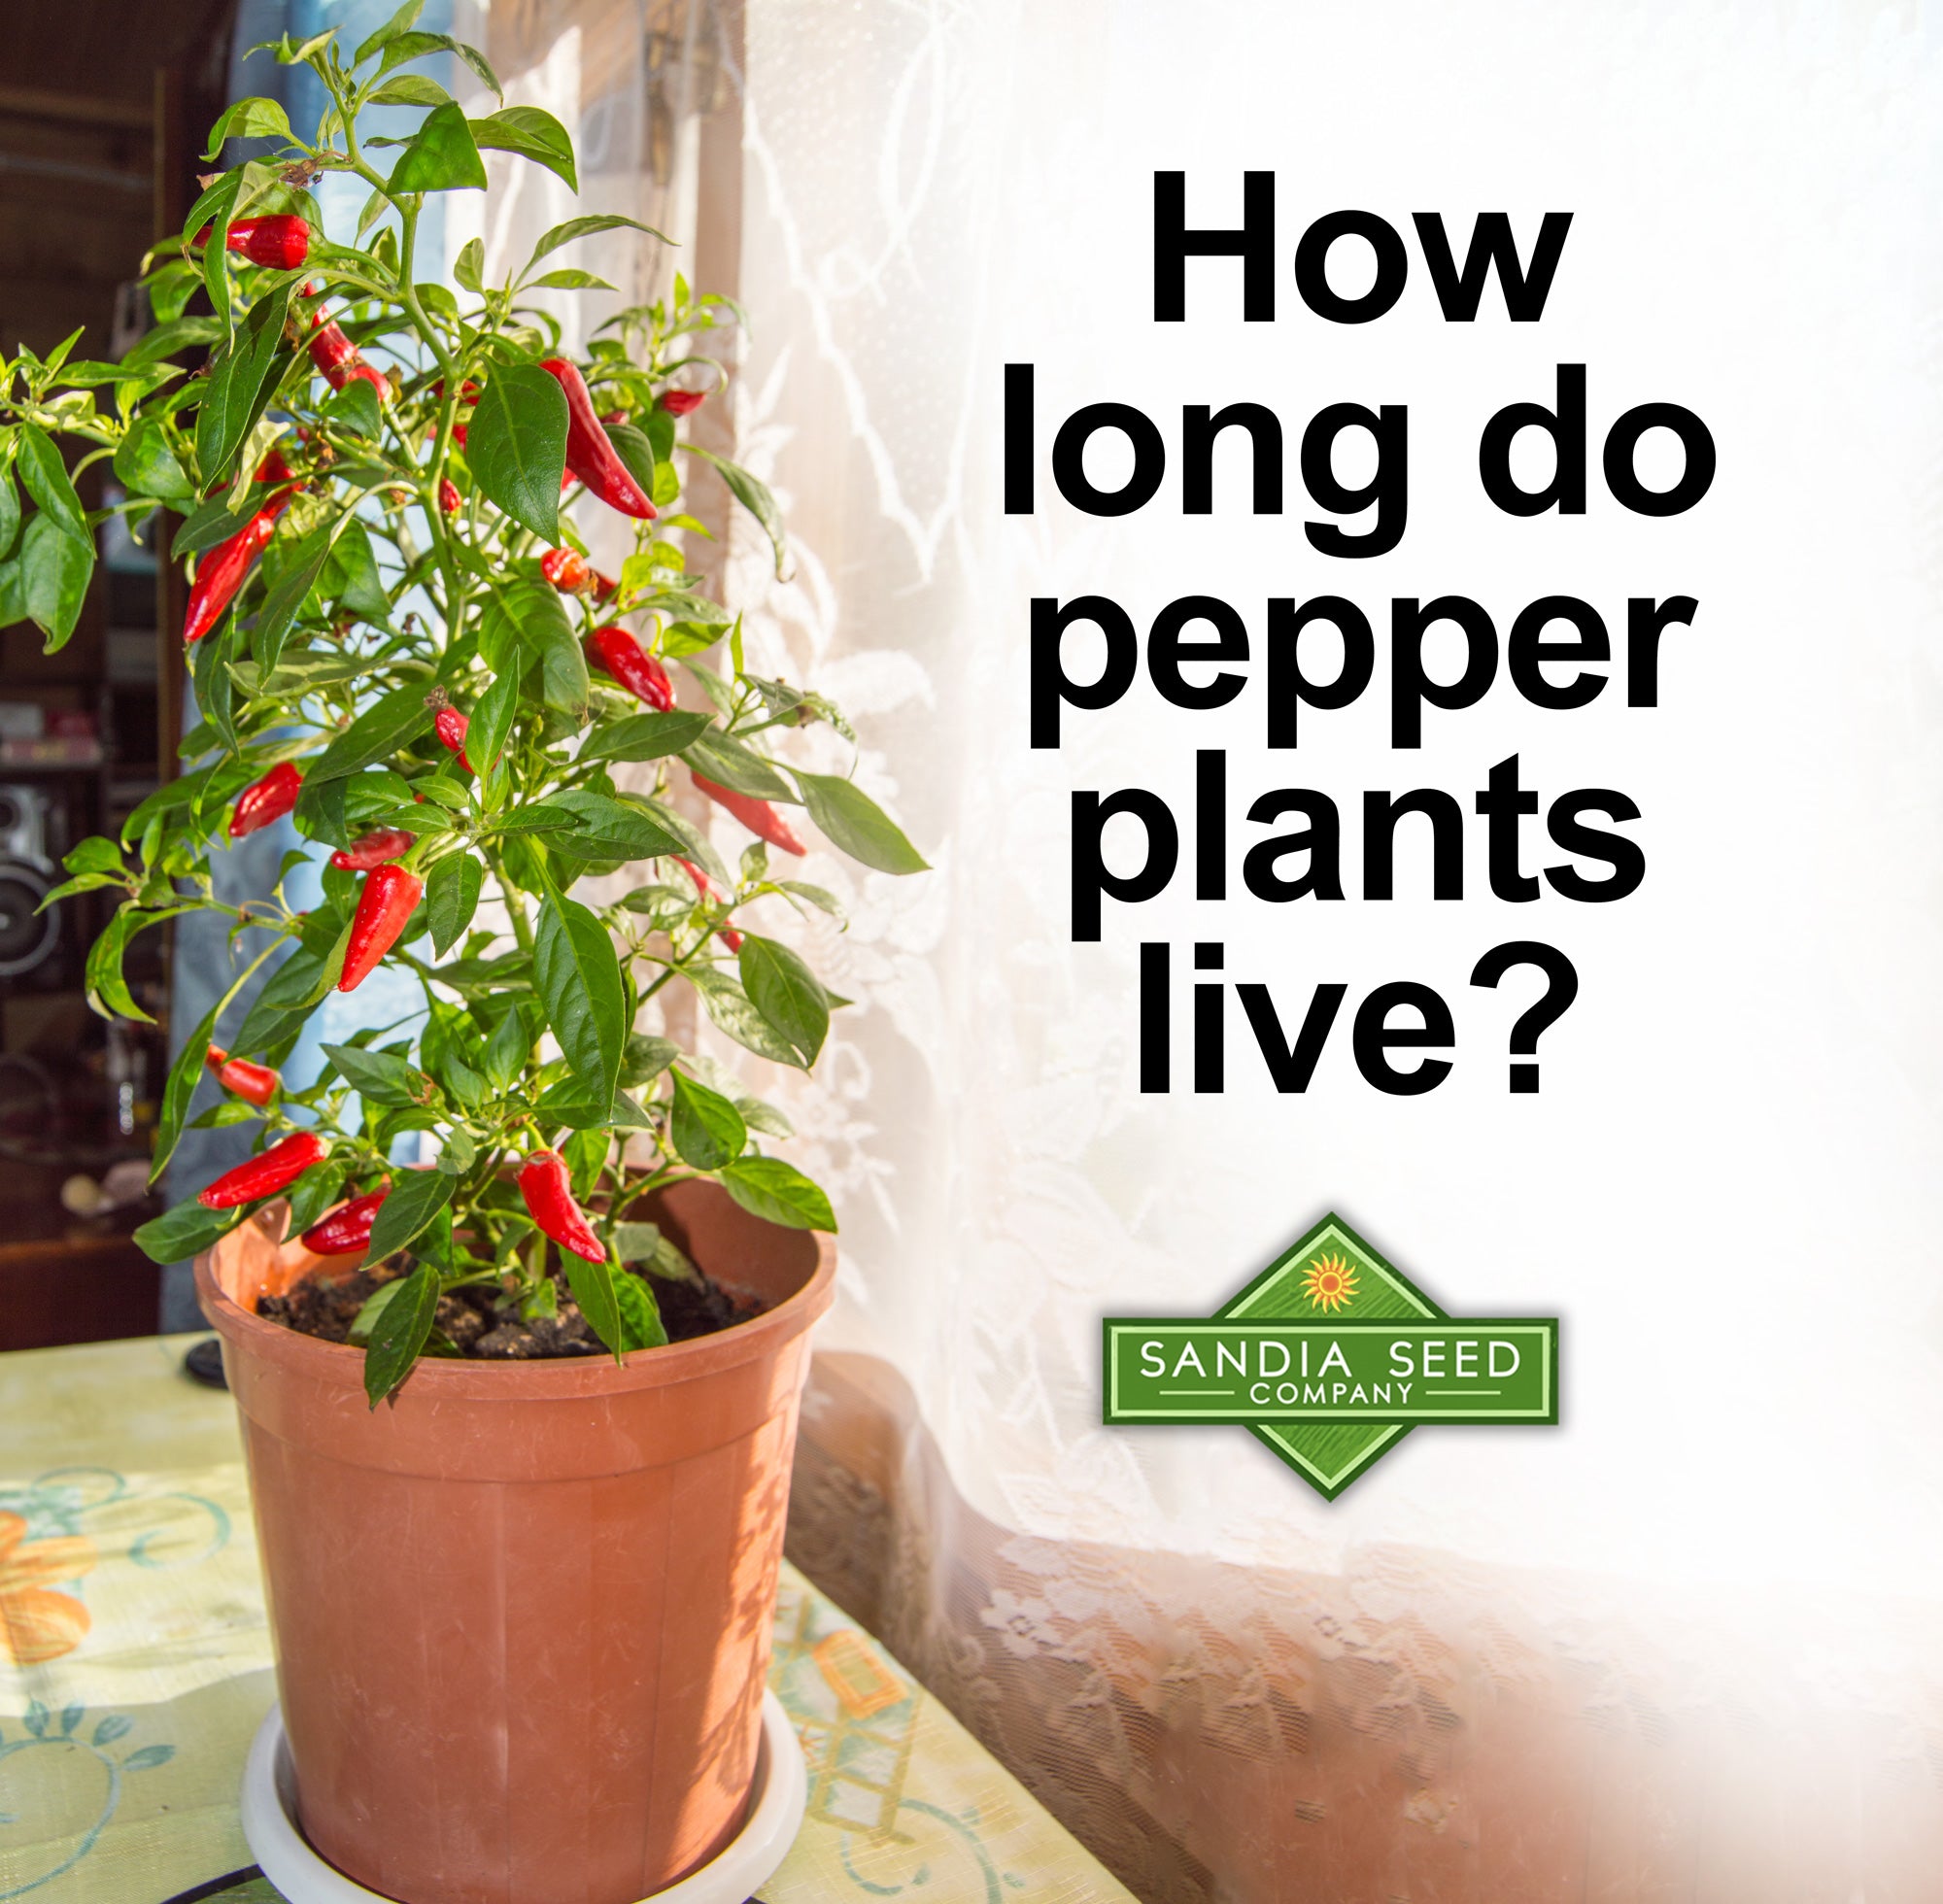 How long do pepper plants live?